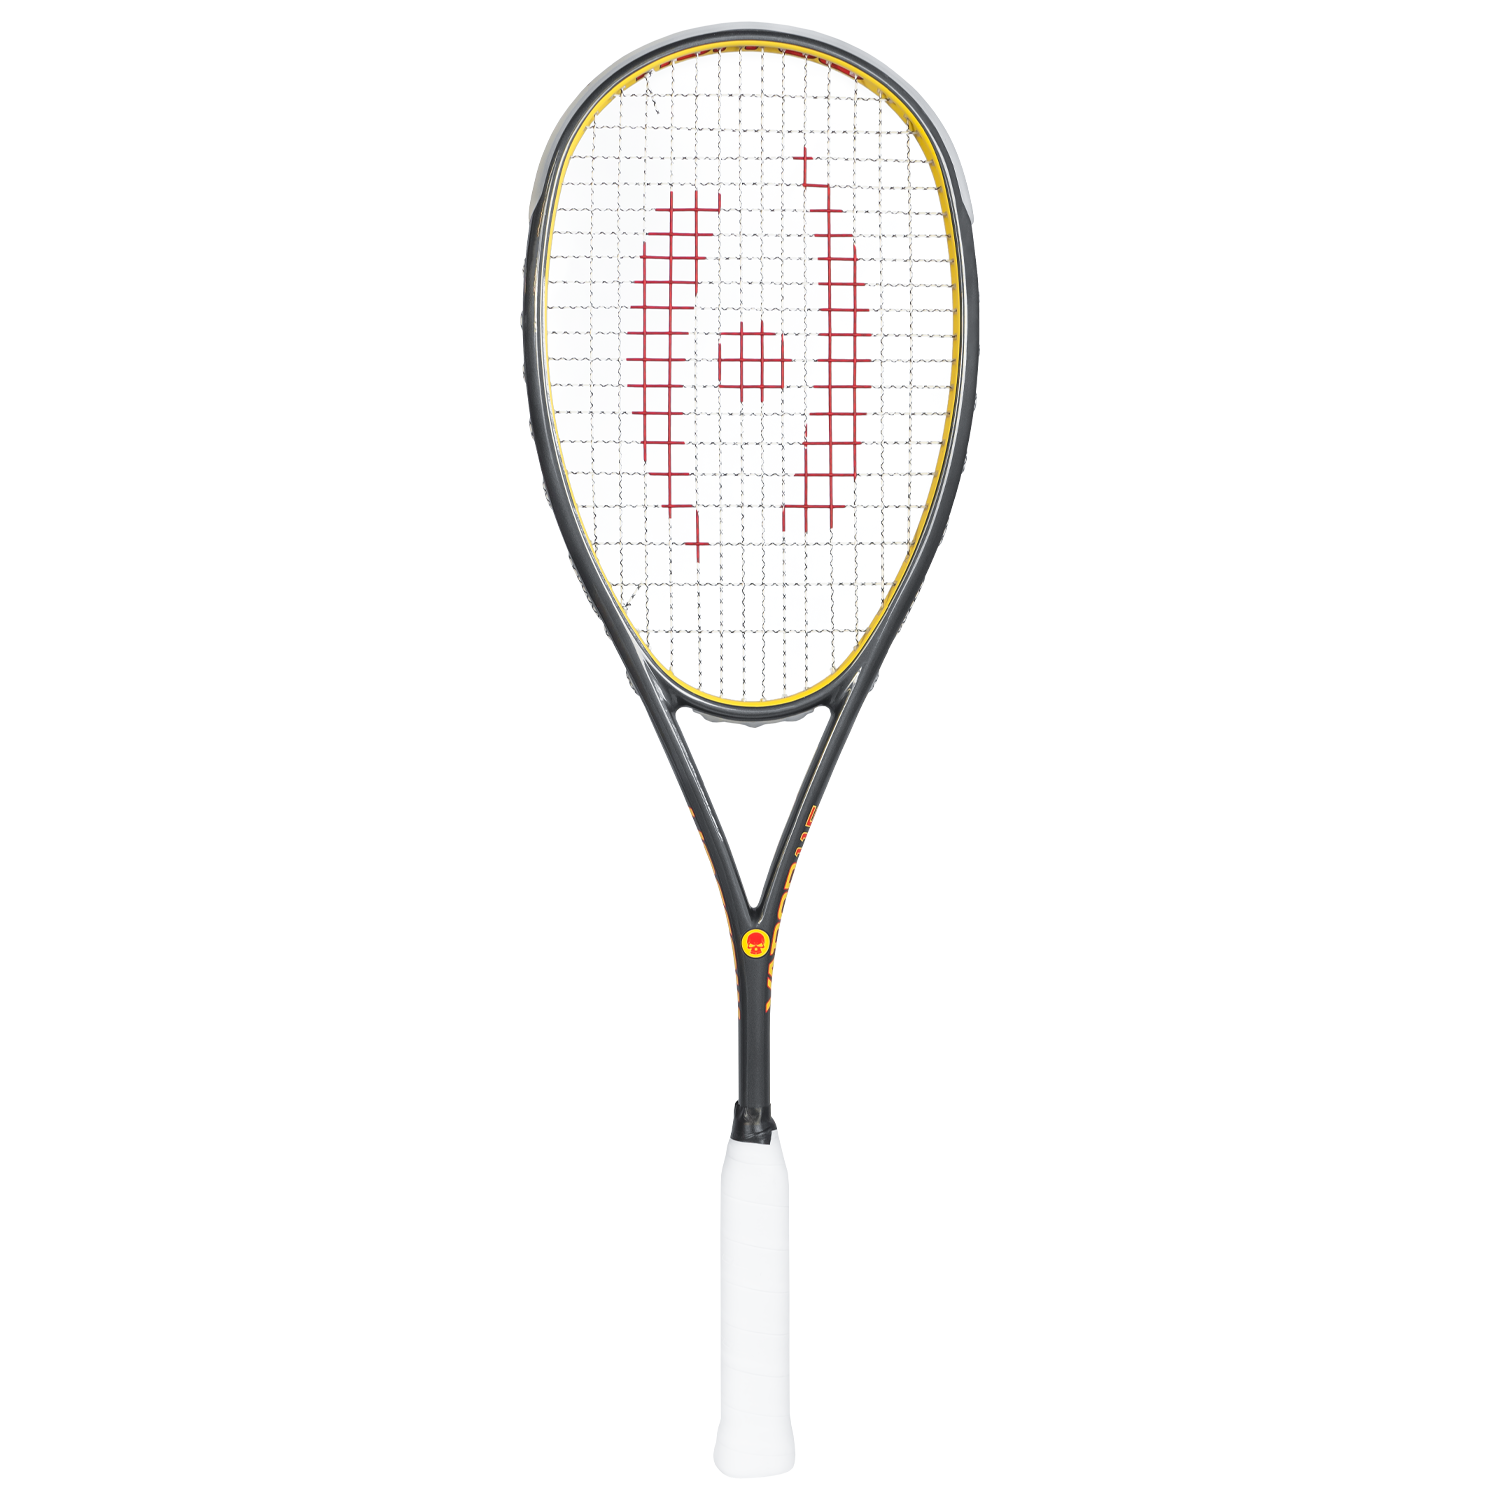 Harrow Vapor 115 Misfit Squash Racquet - Harrow Sports